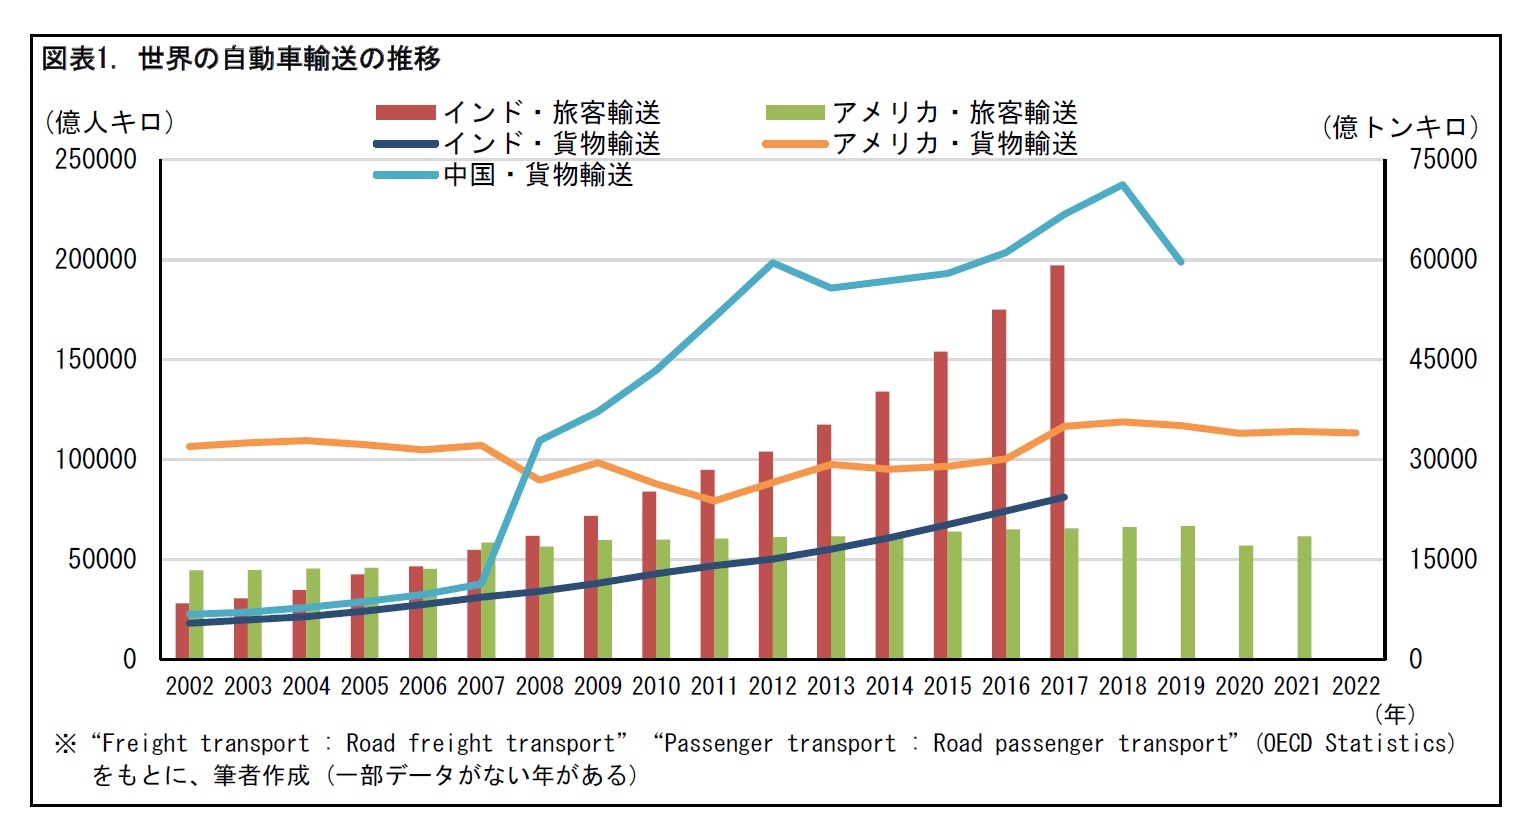 図表1. 世界の自動車輸送の推移